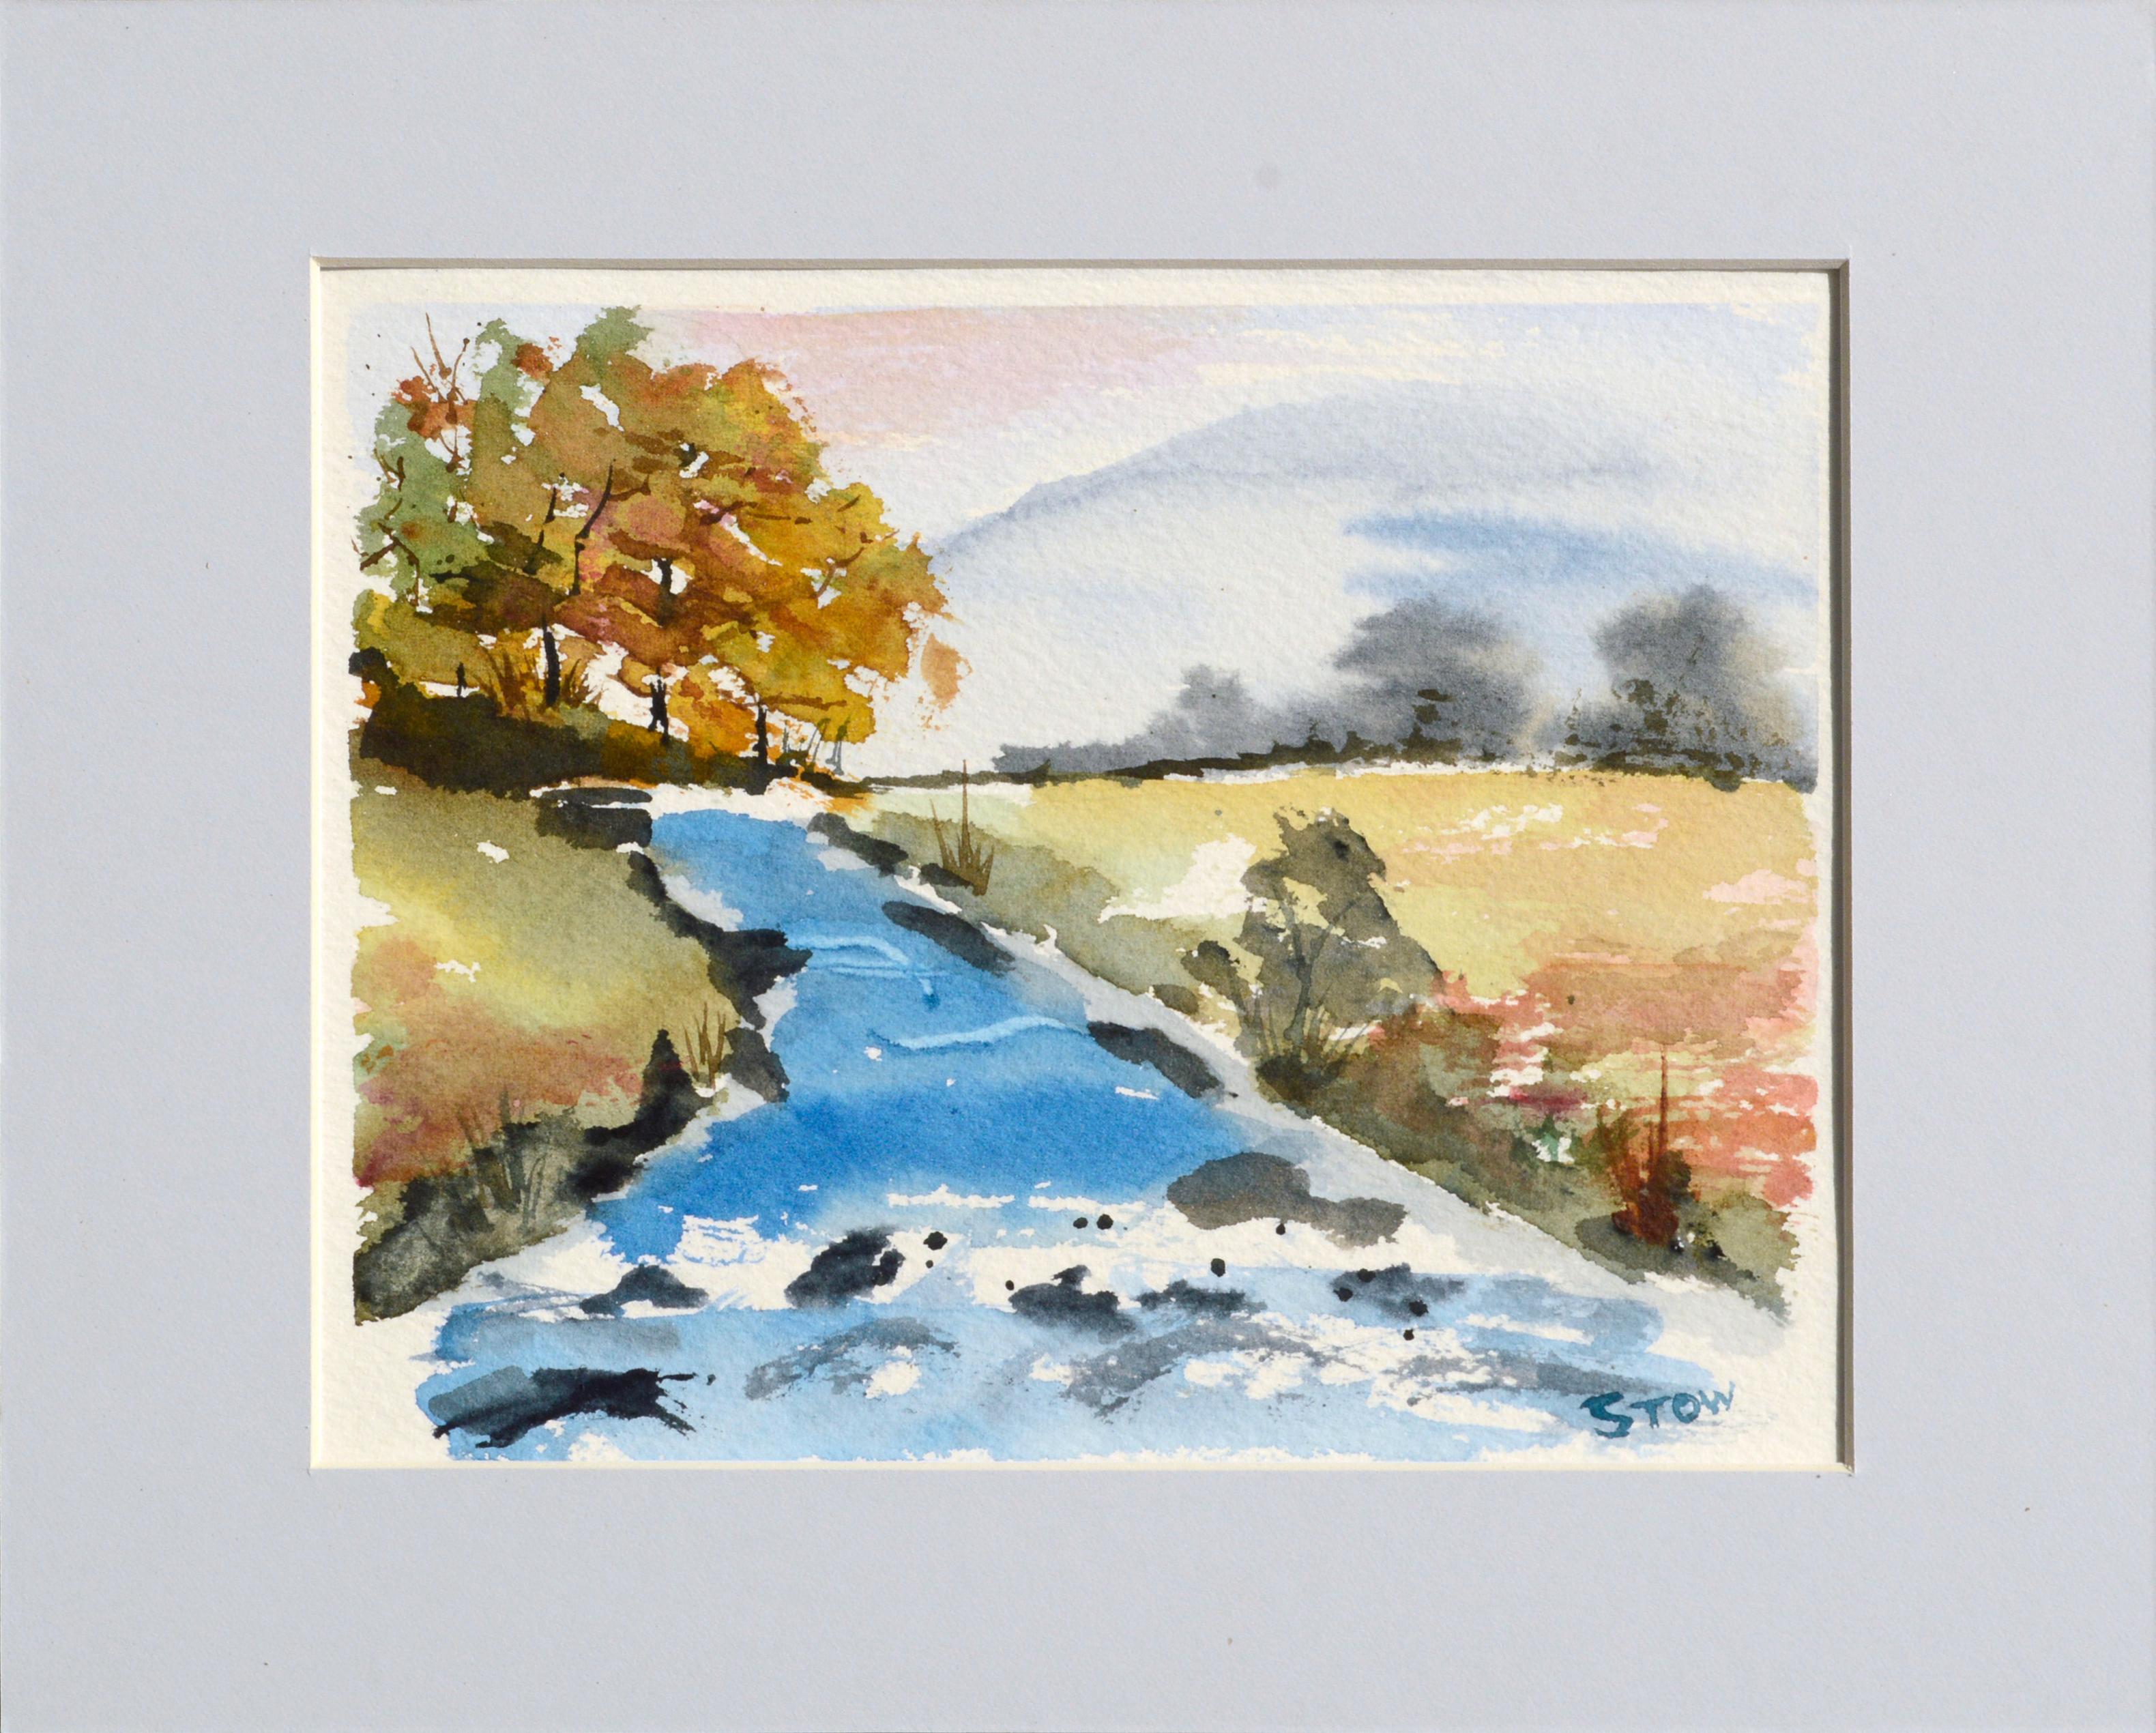 Stow Landscape Art - Stream in Autumn - Landscape